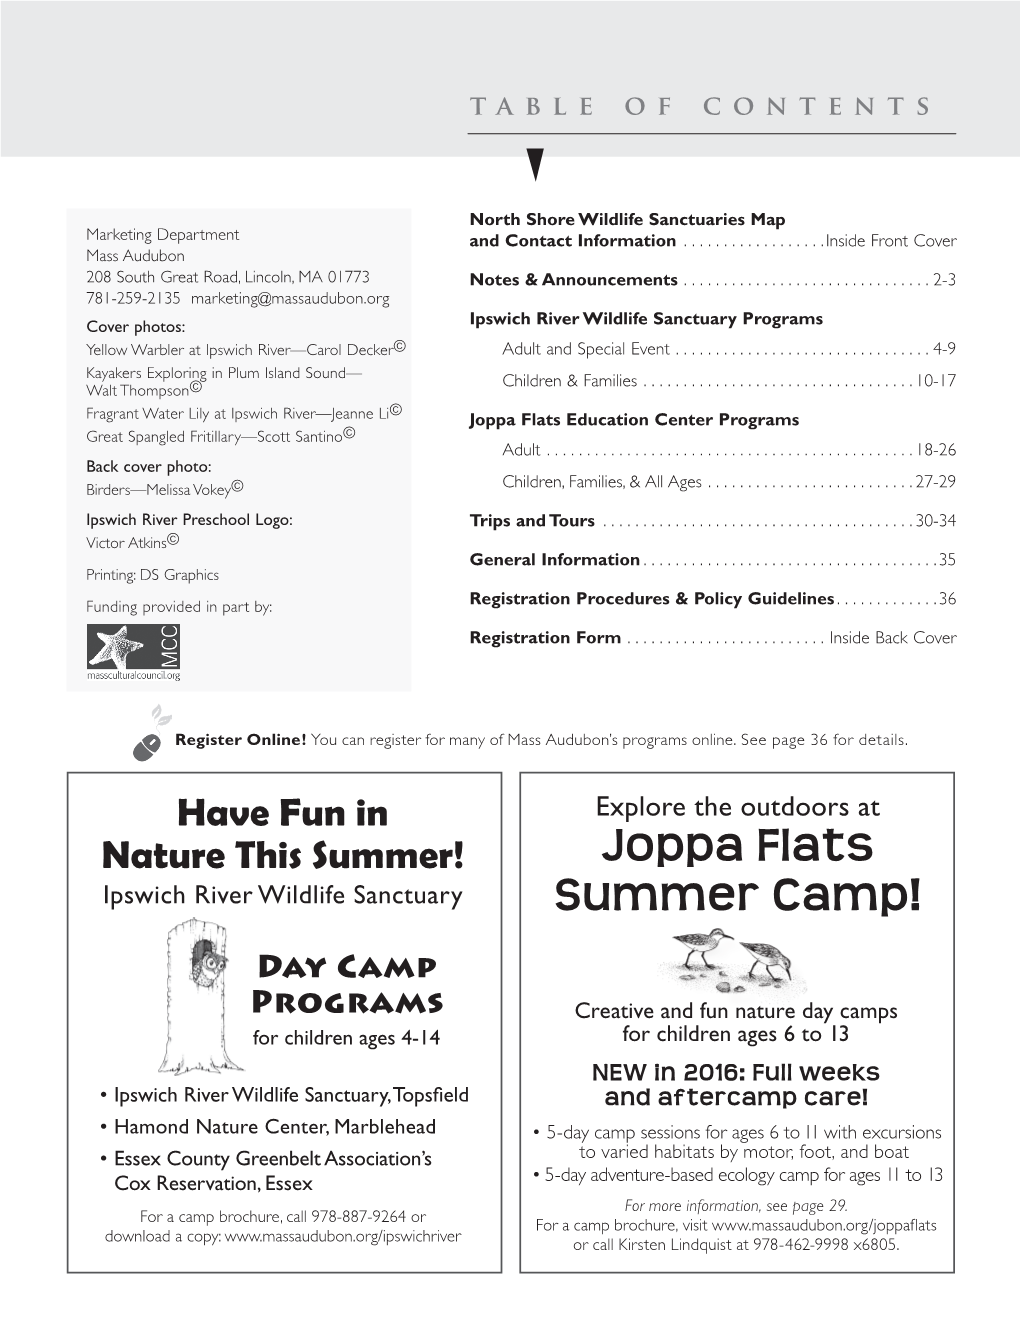 Joppa Flats Summer Camp!